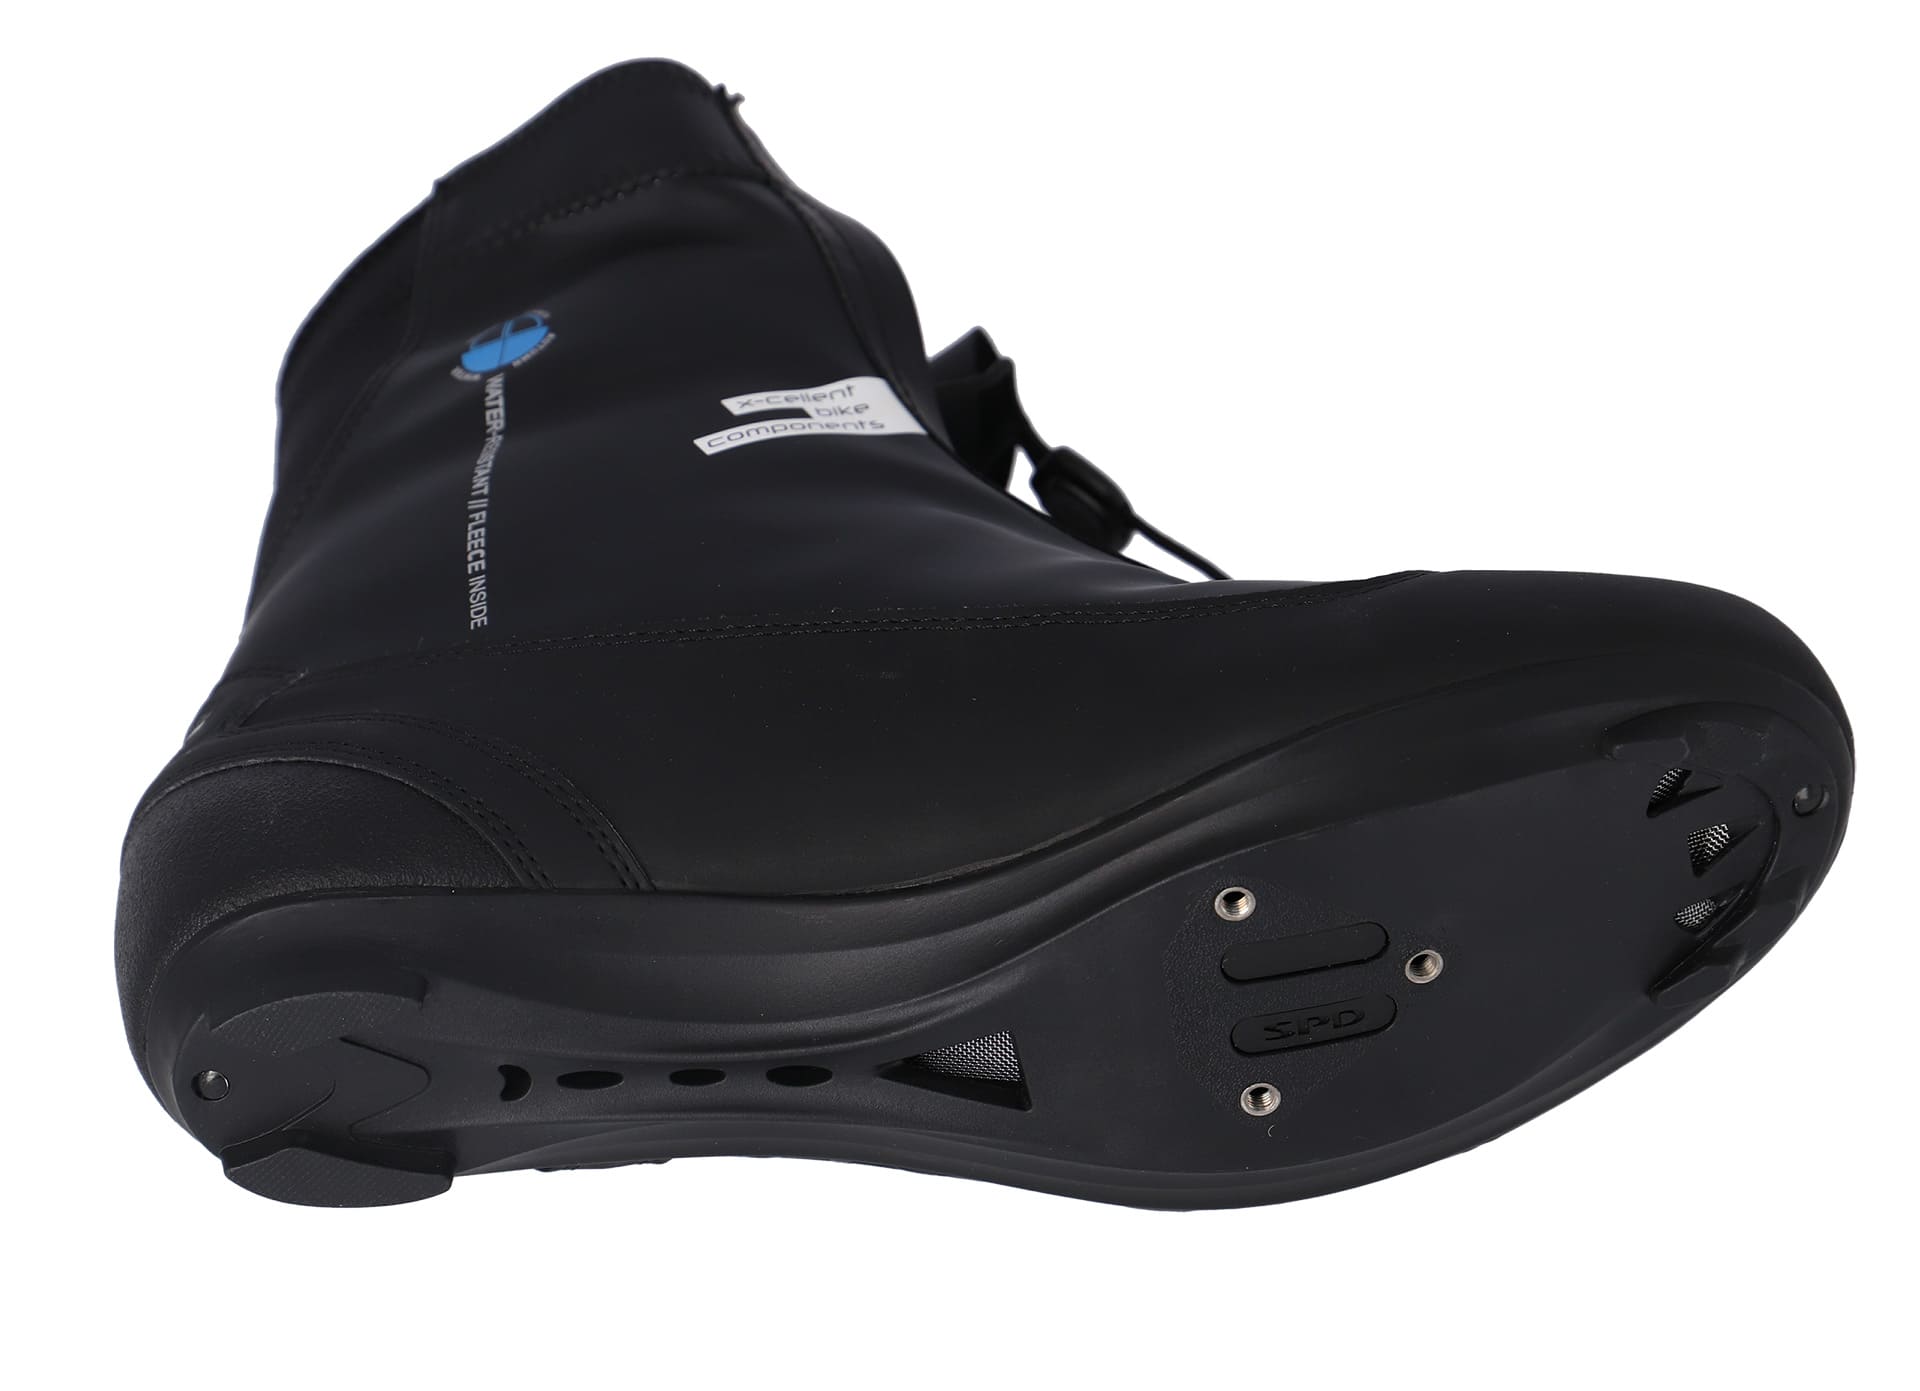 XLC Winter Road Bike Shoes CB-R07 - Black | eBay